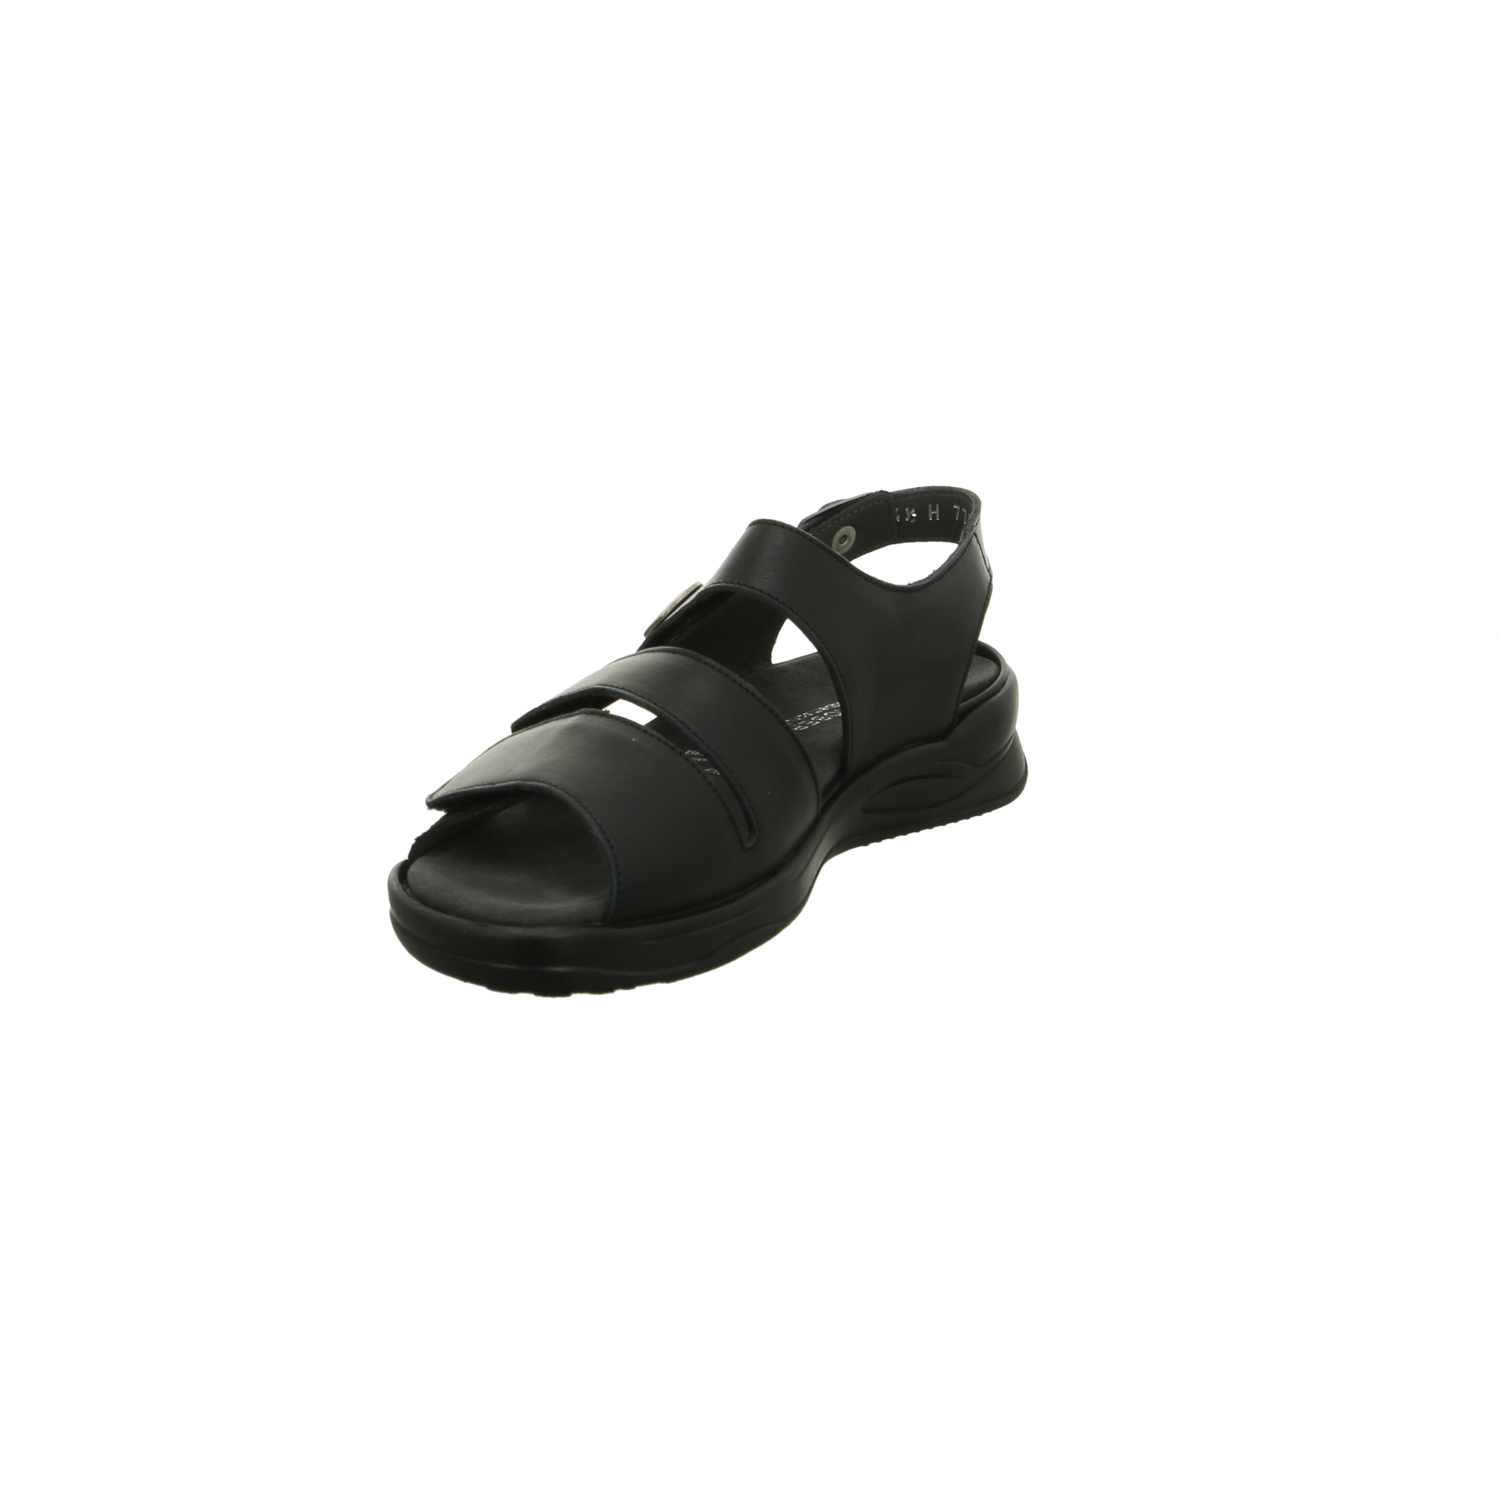 Ströber Comfort-Sandalette schwarz